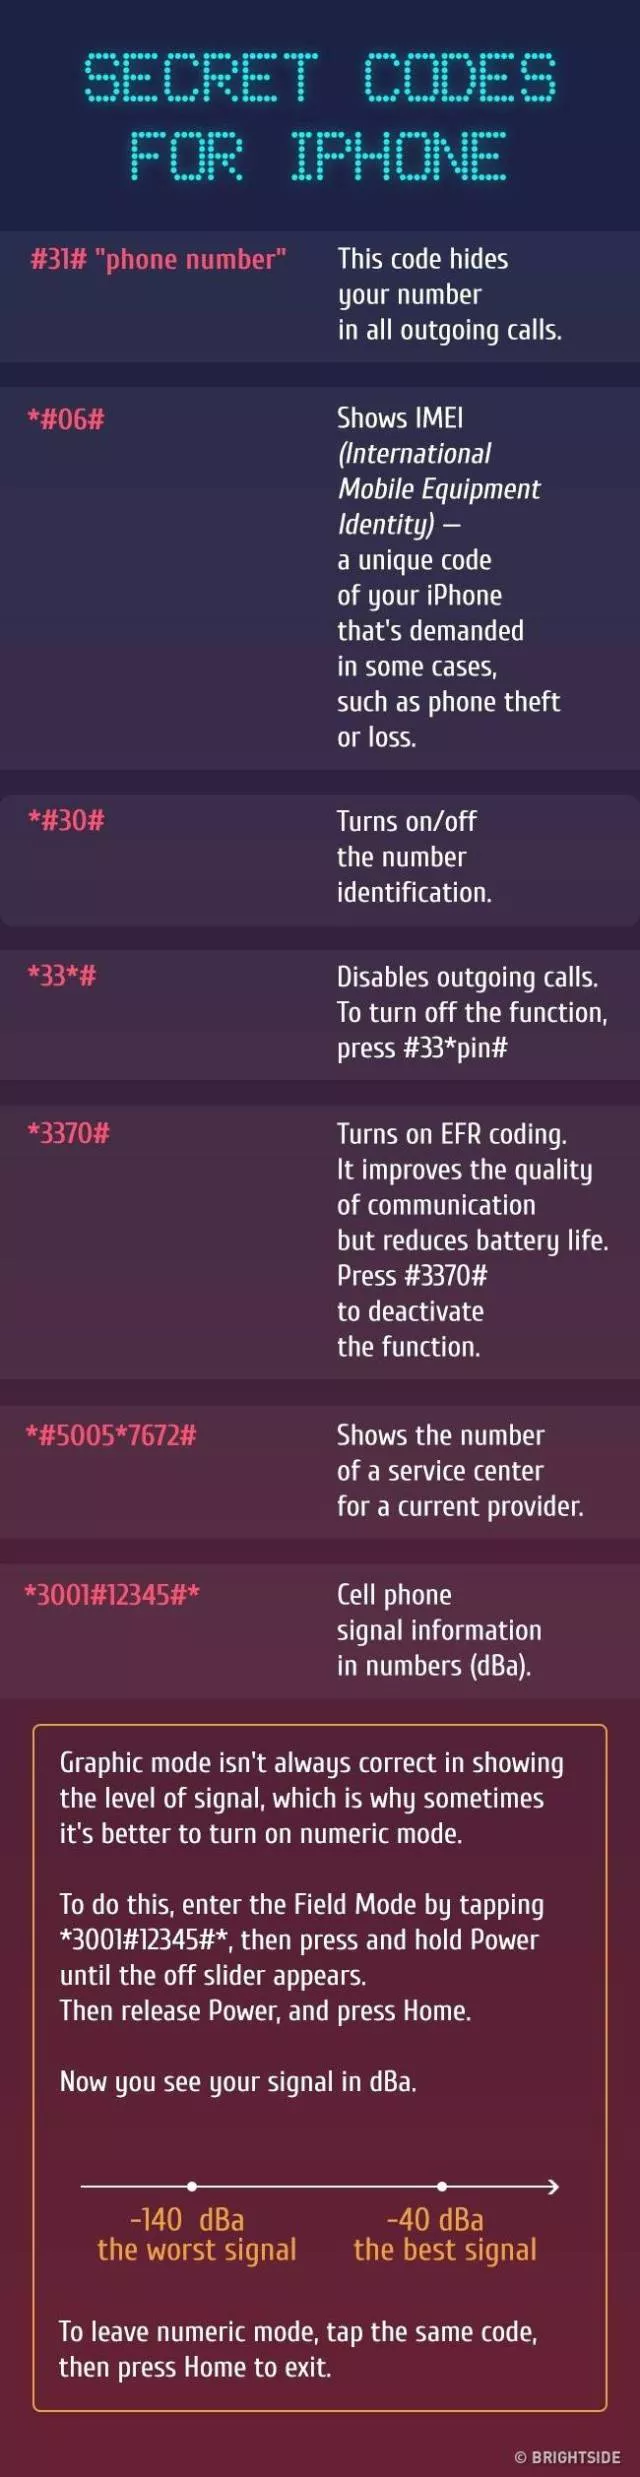 Secret codes for all smartphones - #1 